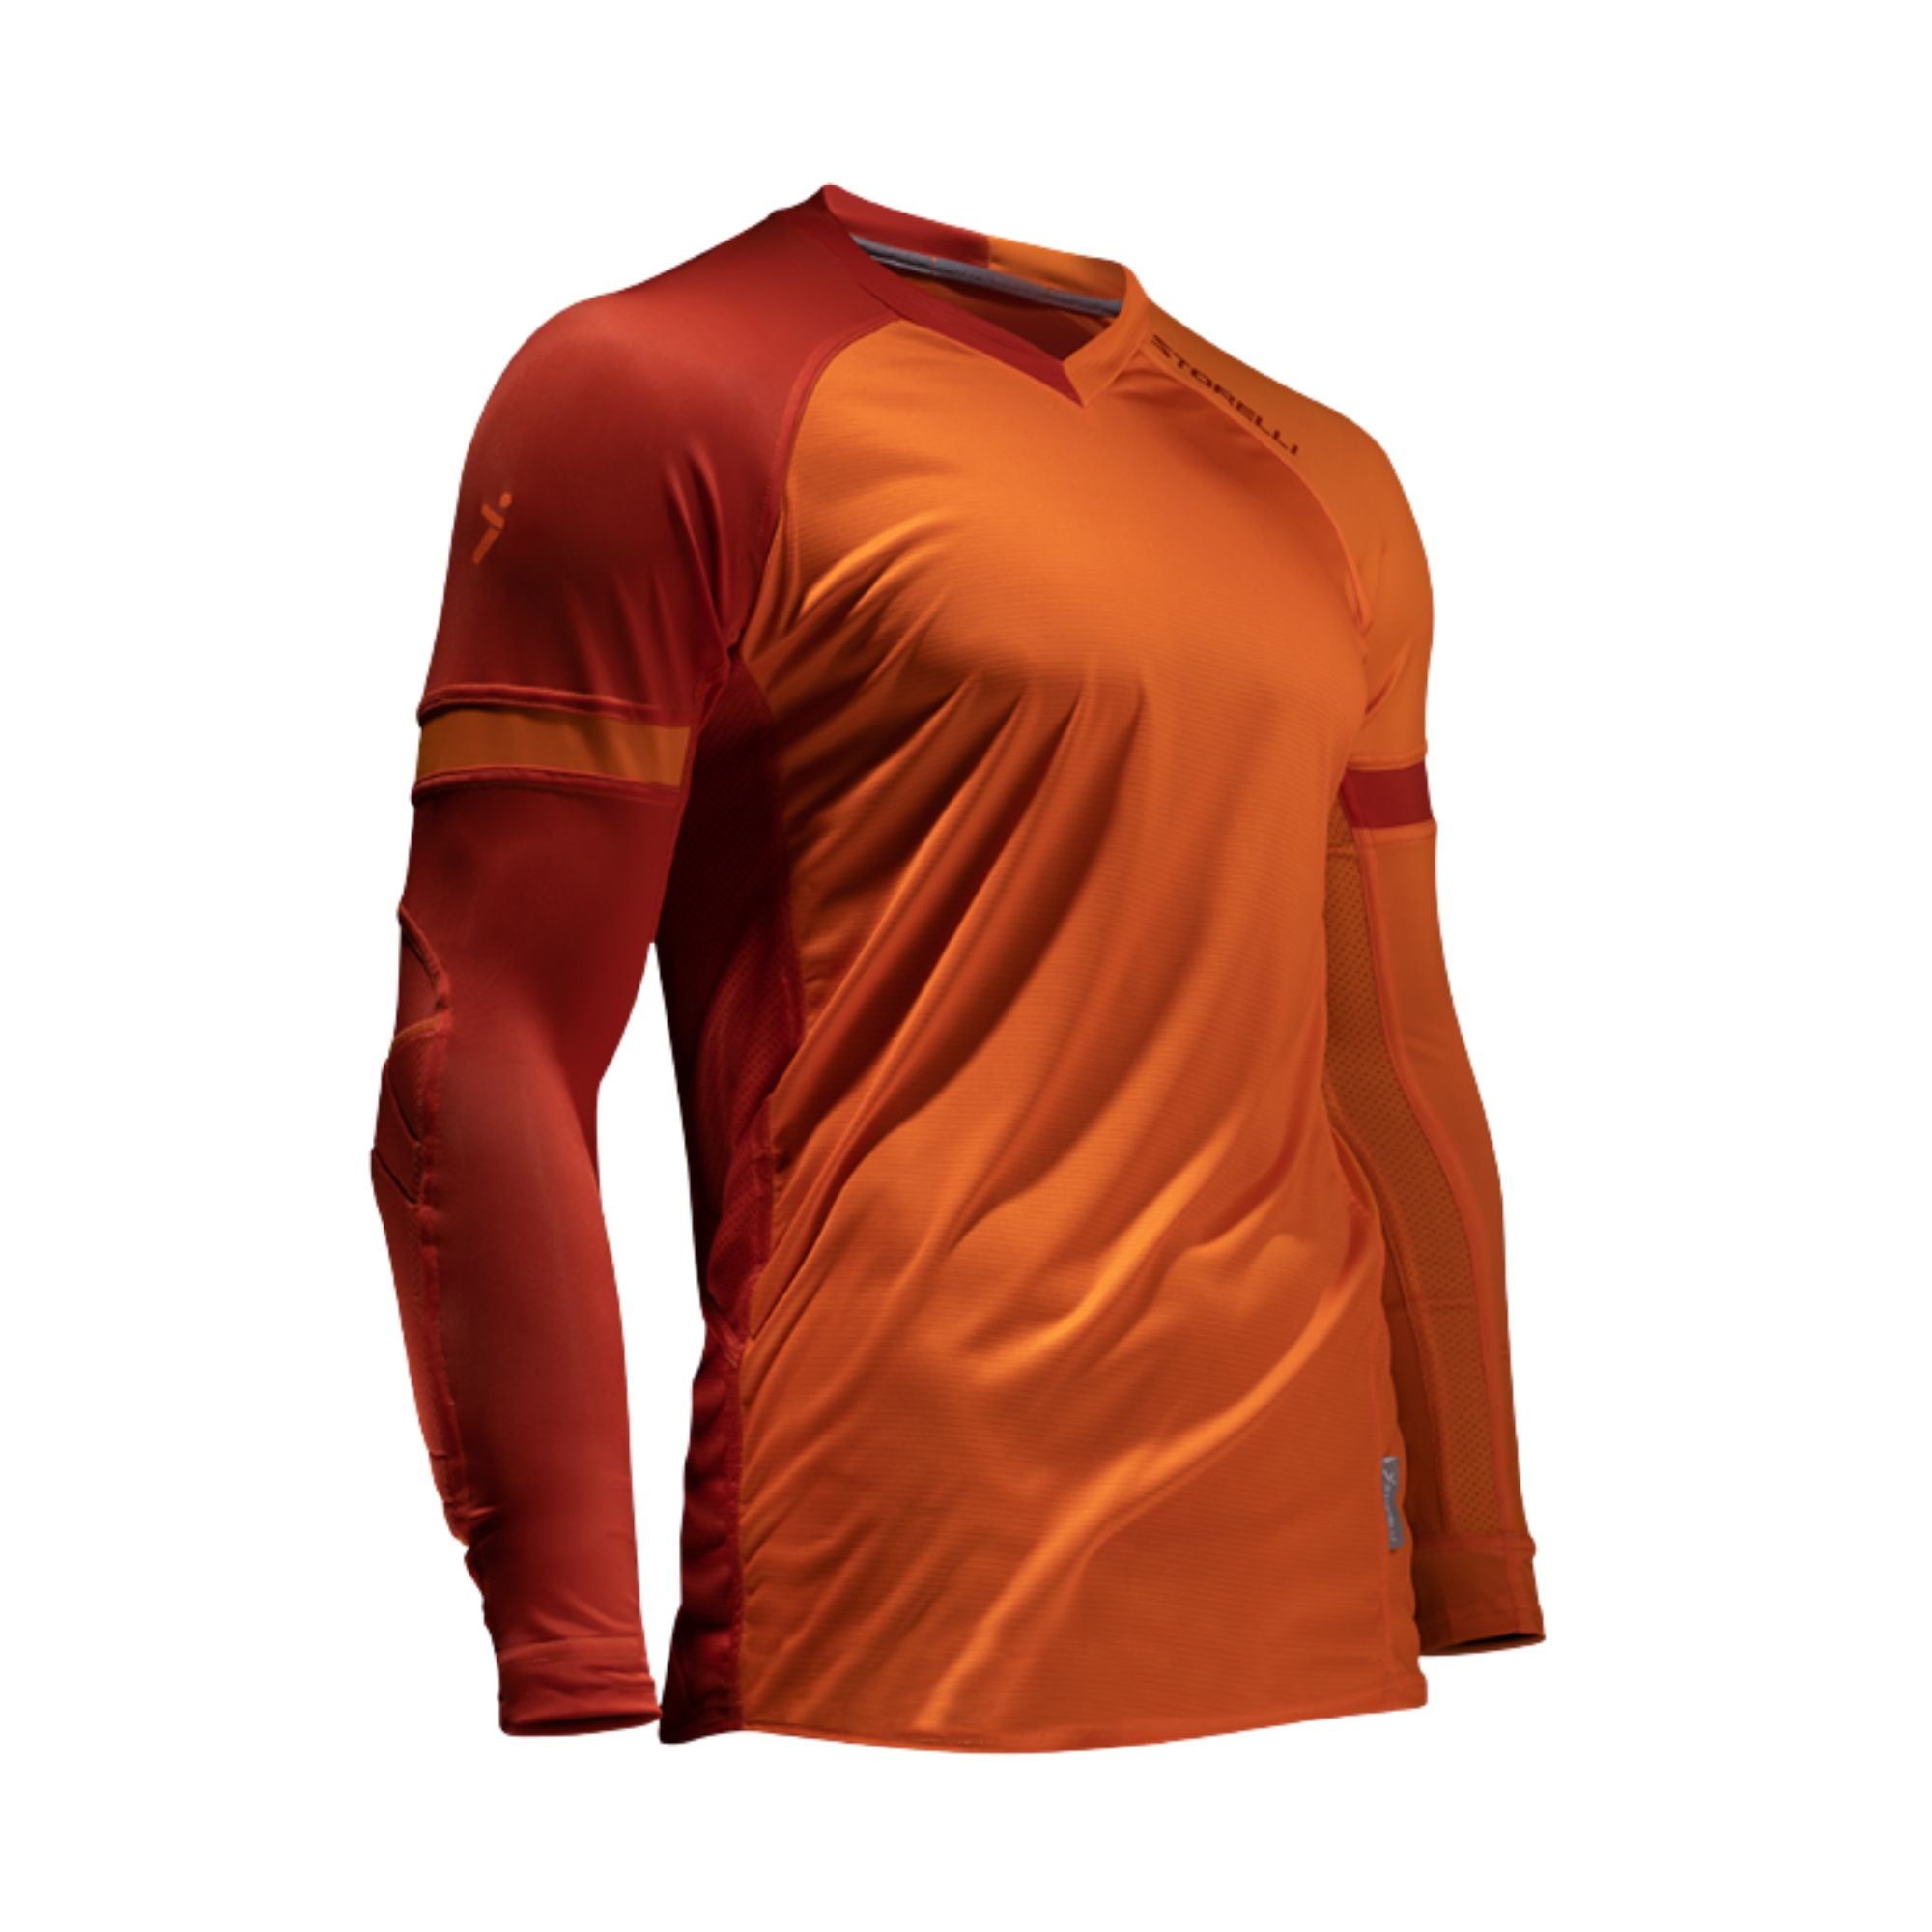 Goalkeeper Jersey by Storelli - Orange - ITASPORT